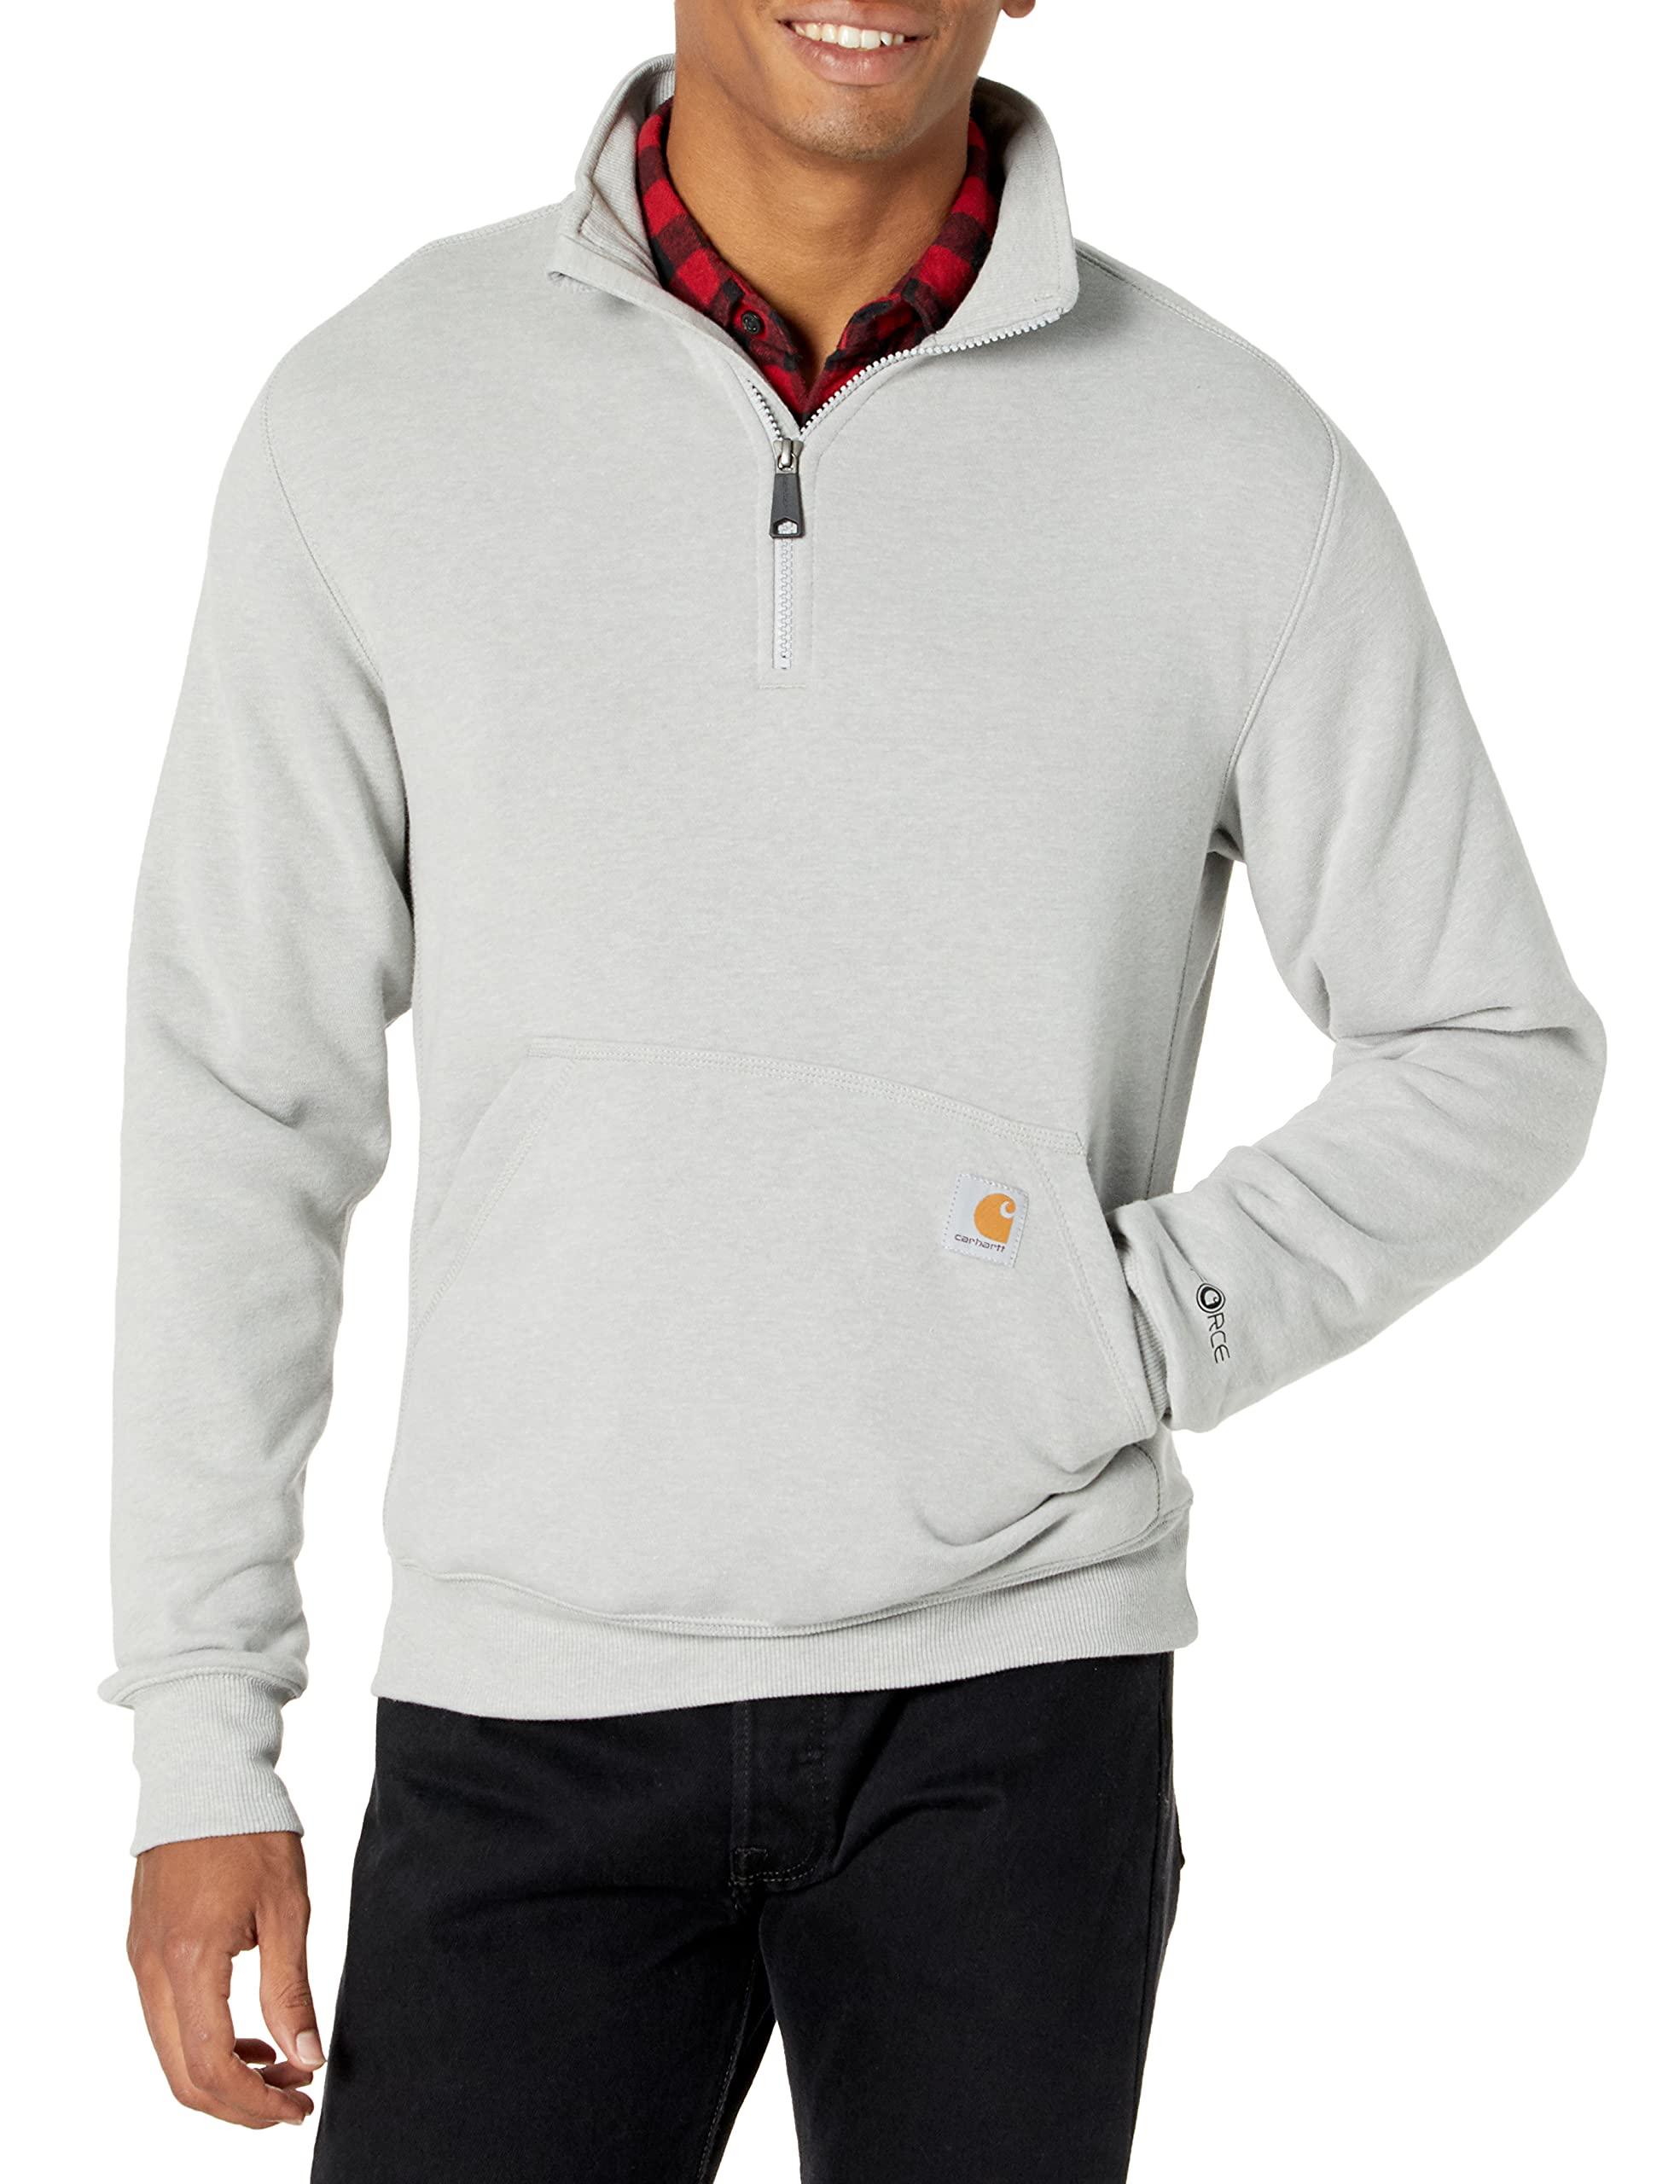 Mens Quarter 1/4 Zip Zipper Heavy Weight Cotton Blend Sweatshirt Pullover Top